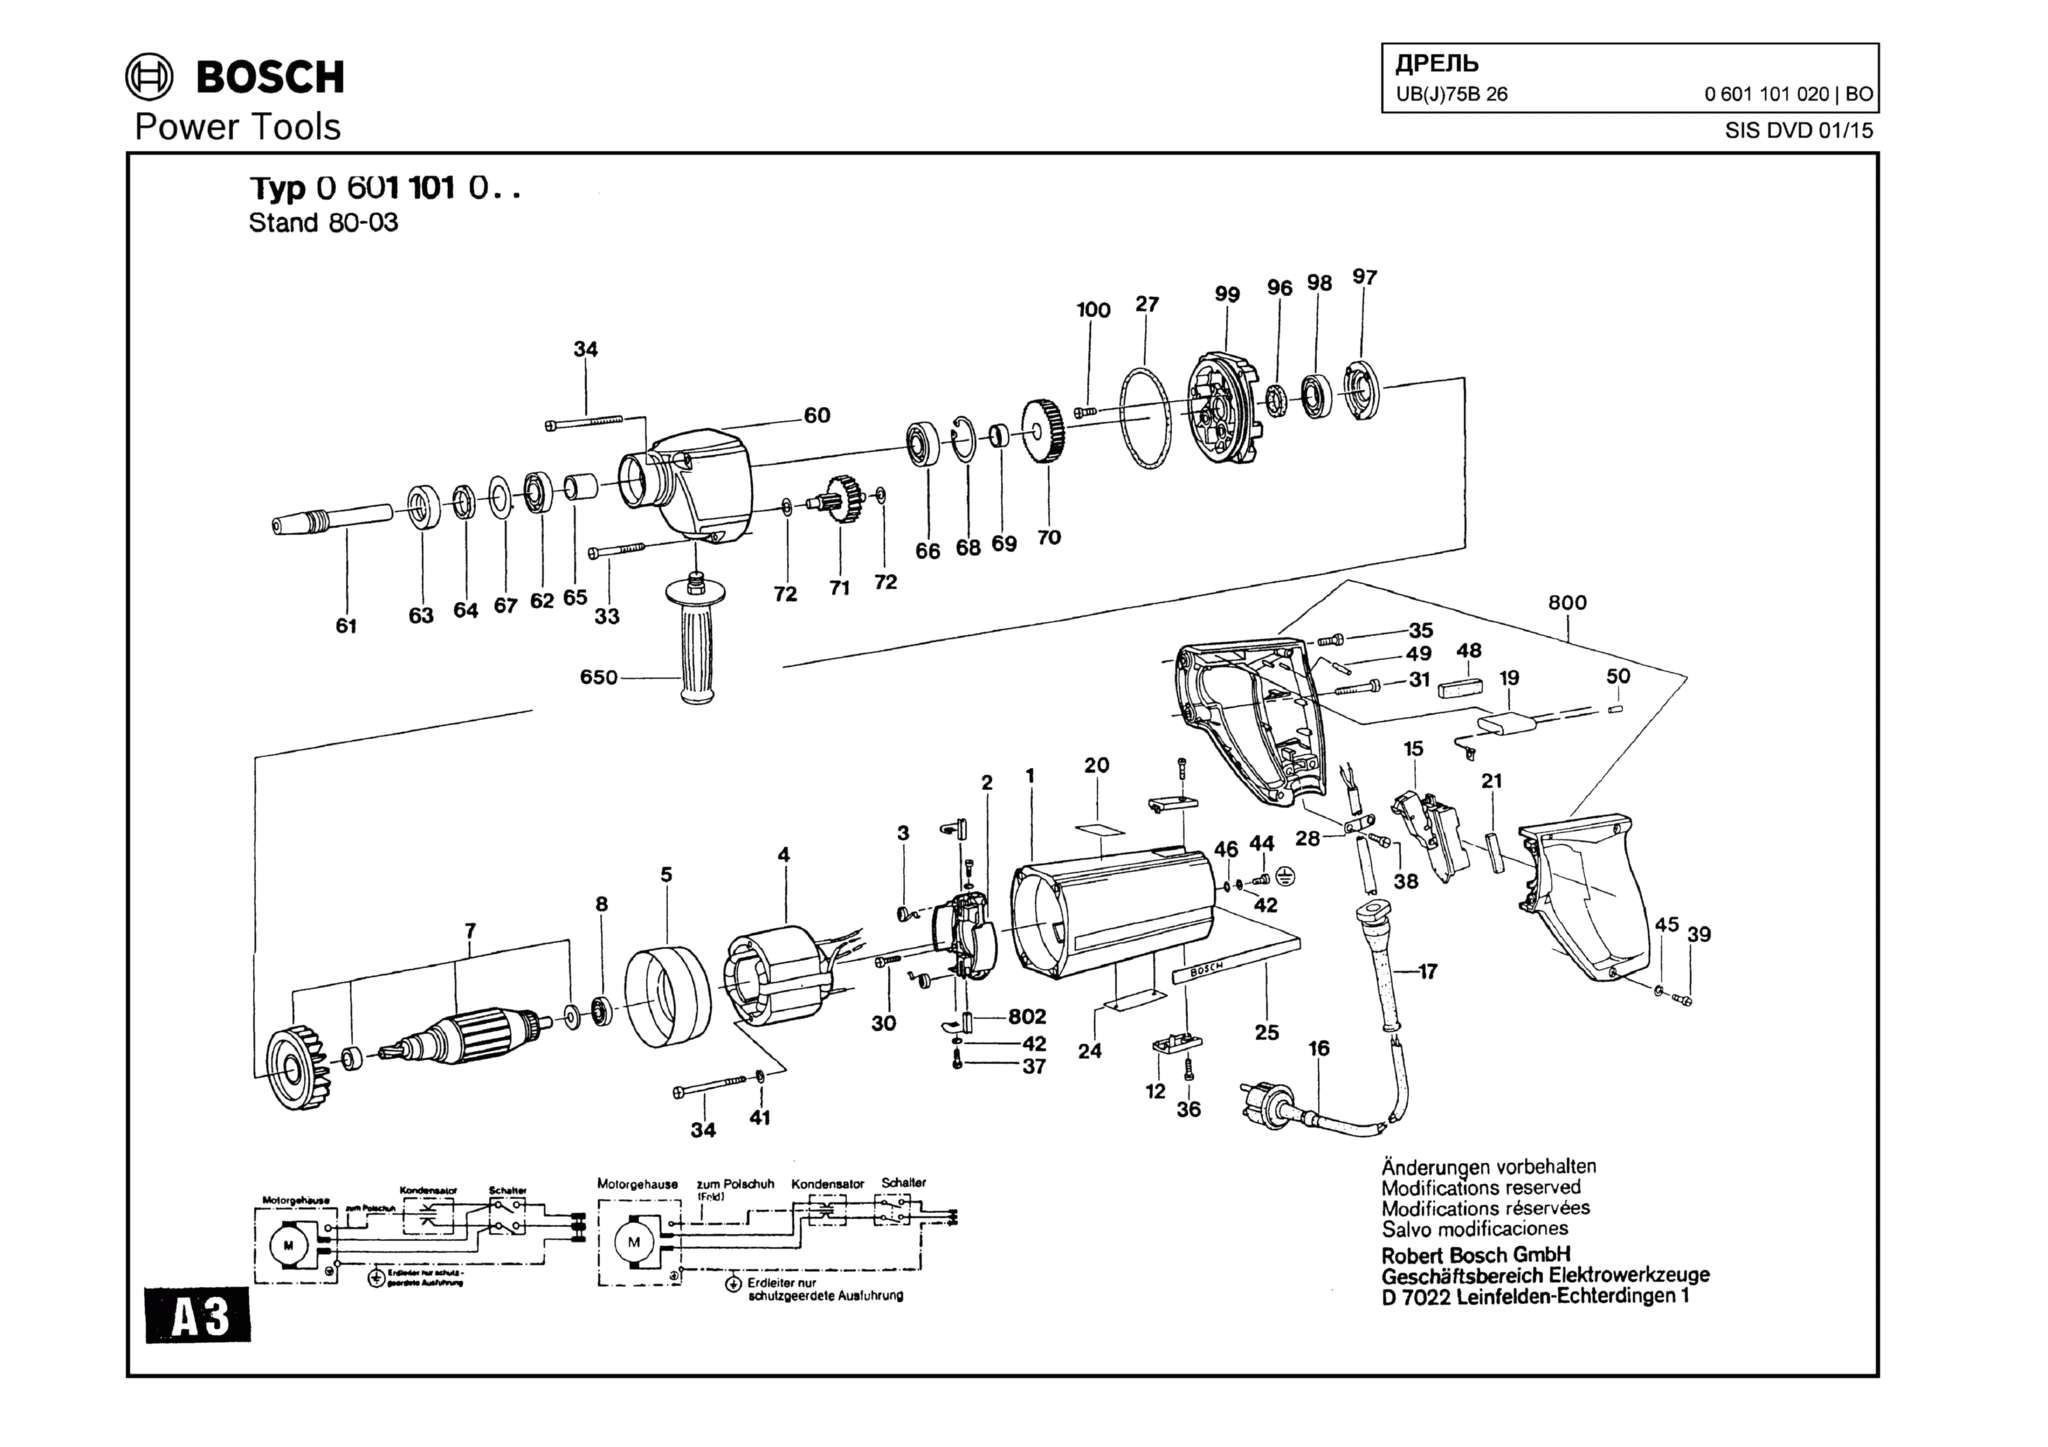 Запчасти, схема и деталировка Bosch UB(J)75B 26 (ТИП 0601101020)